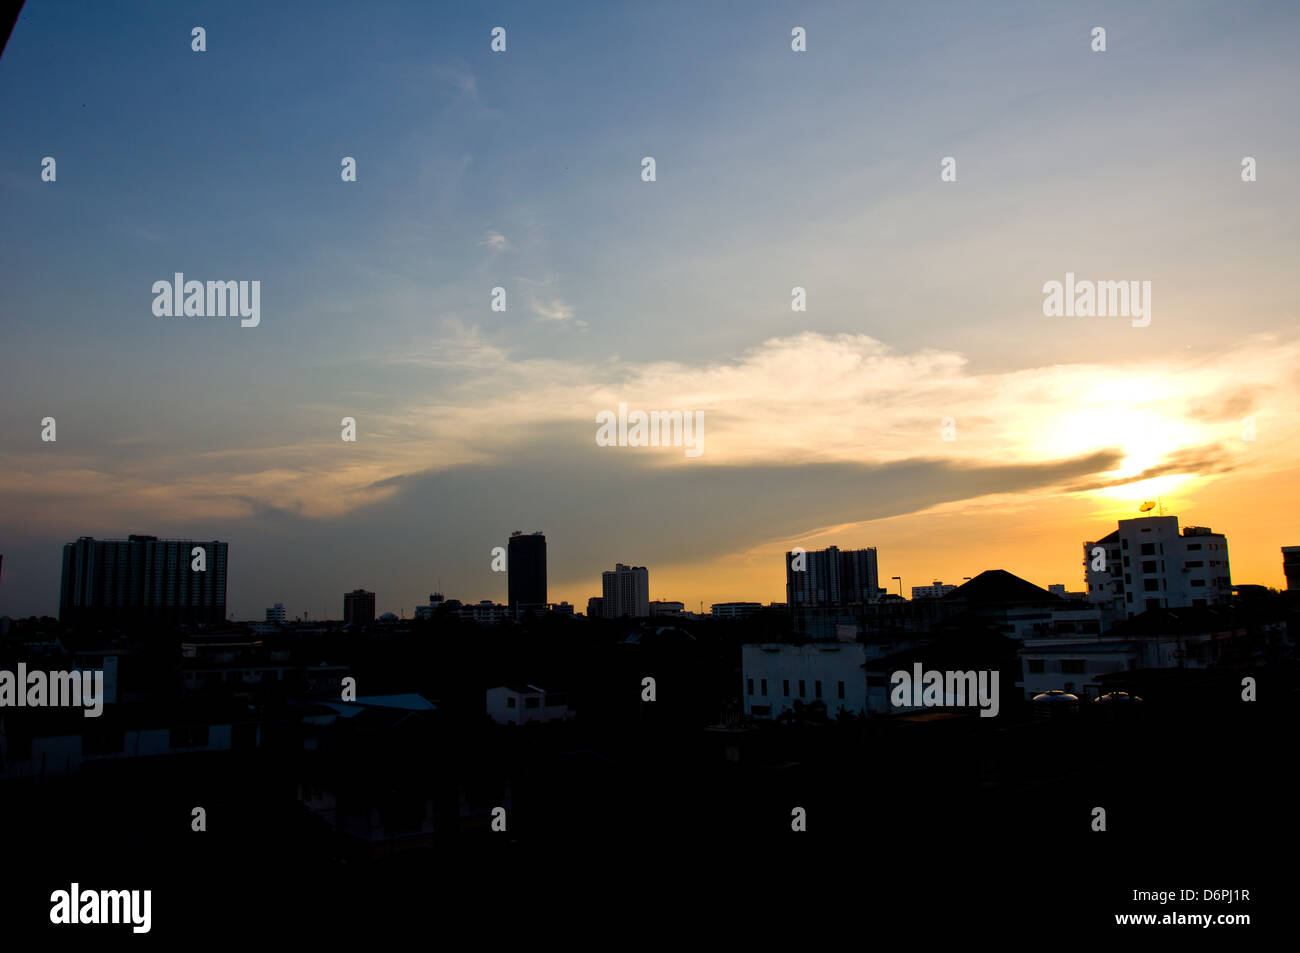 silhouette of building before sundown Stock Photo